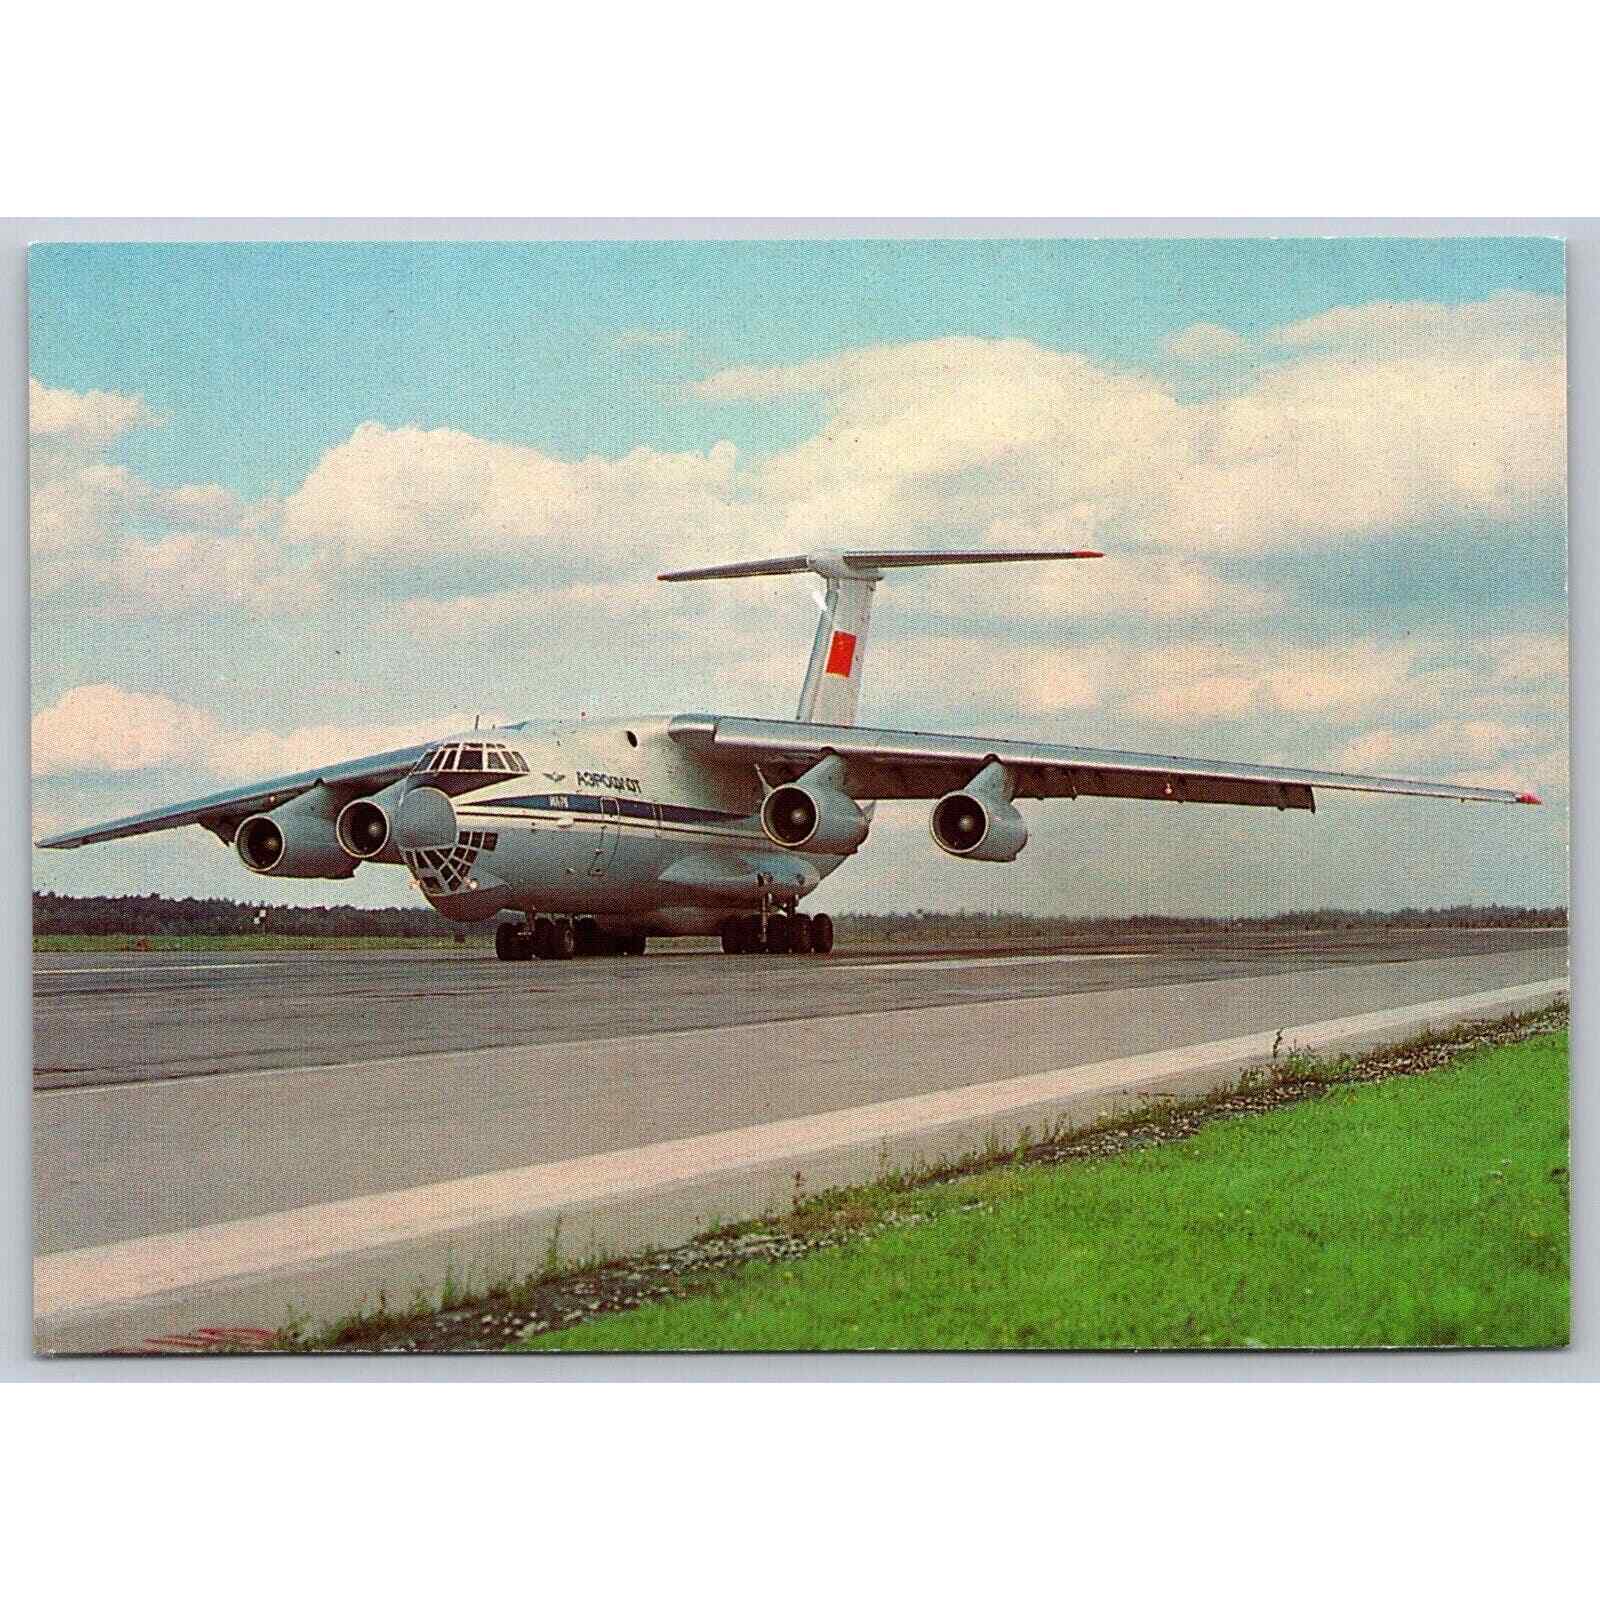 Aeroflot Soviet Airlines Ilyushin IL-76 Airport Aircraft USSR Russian Postcard